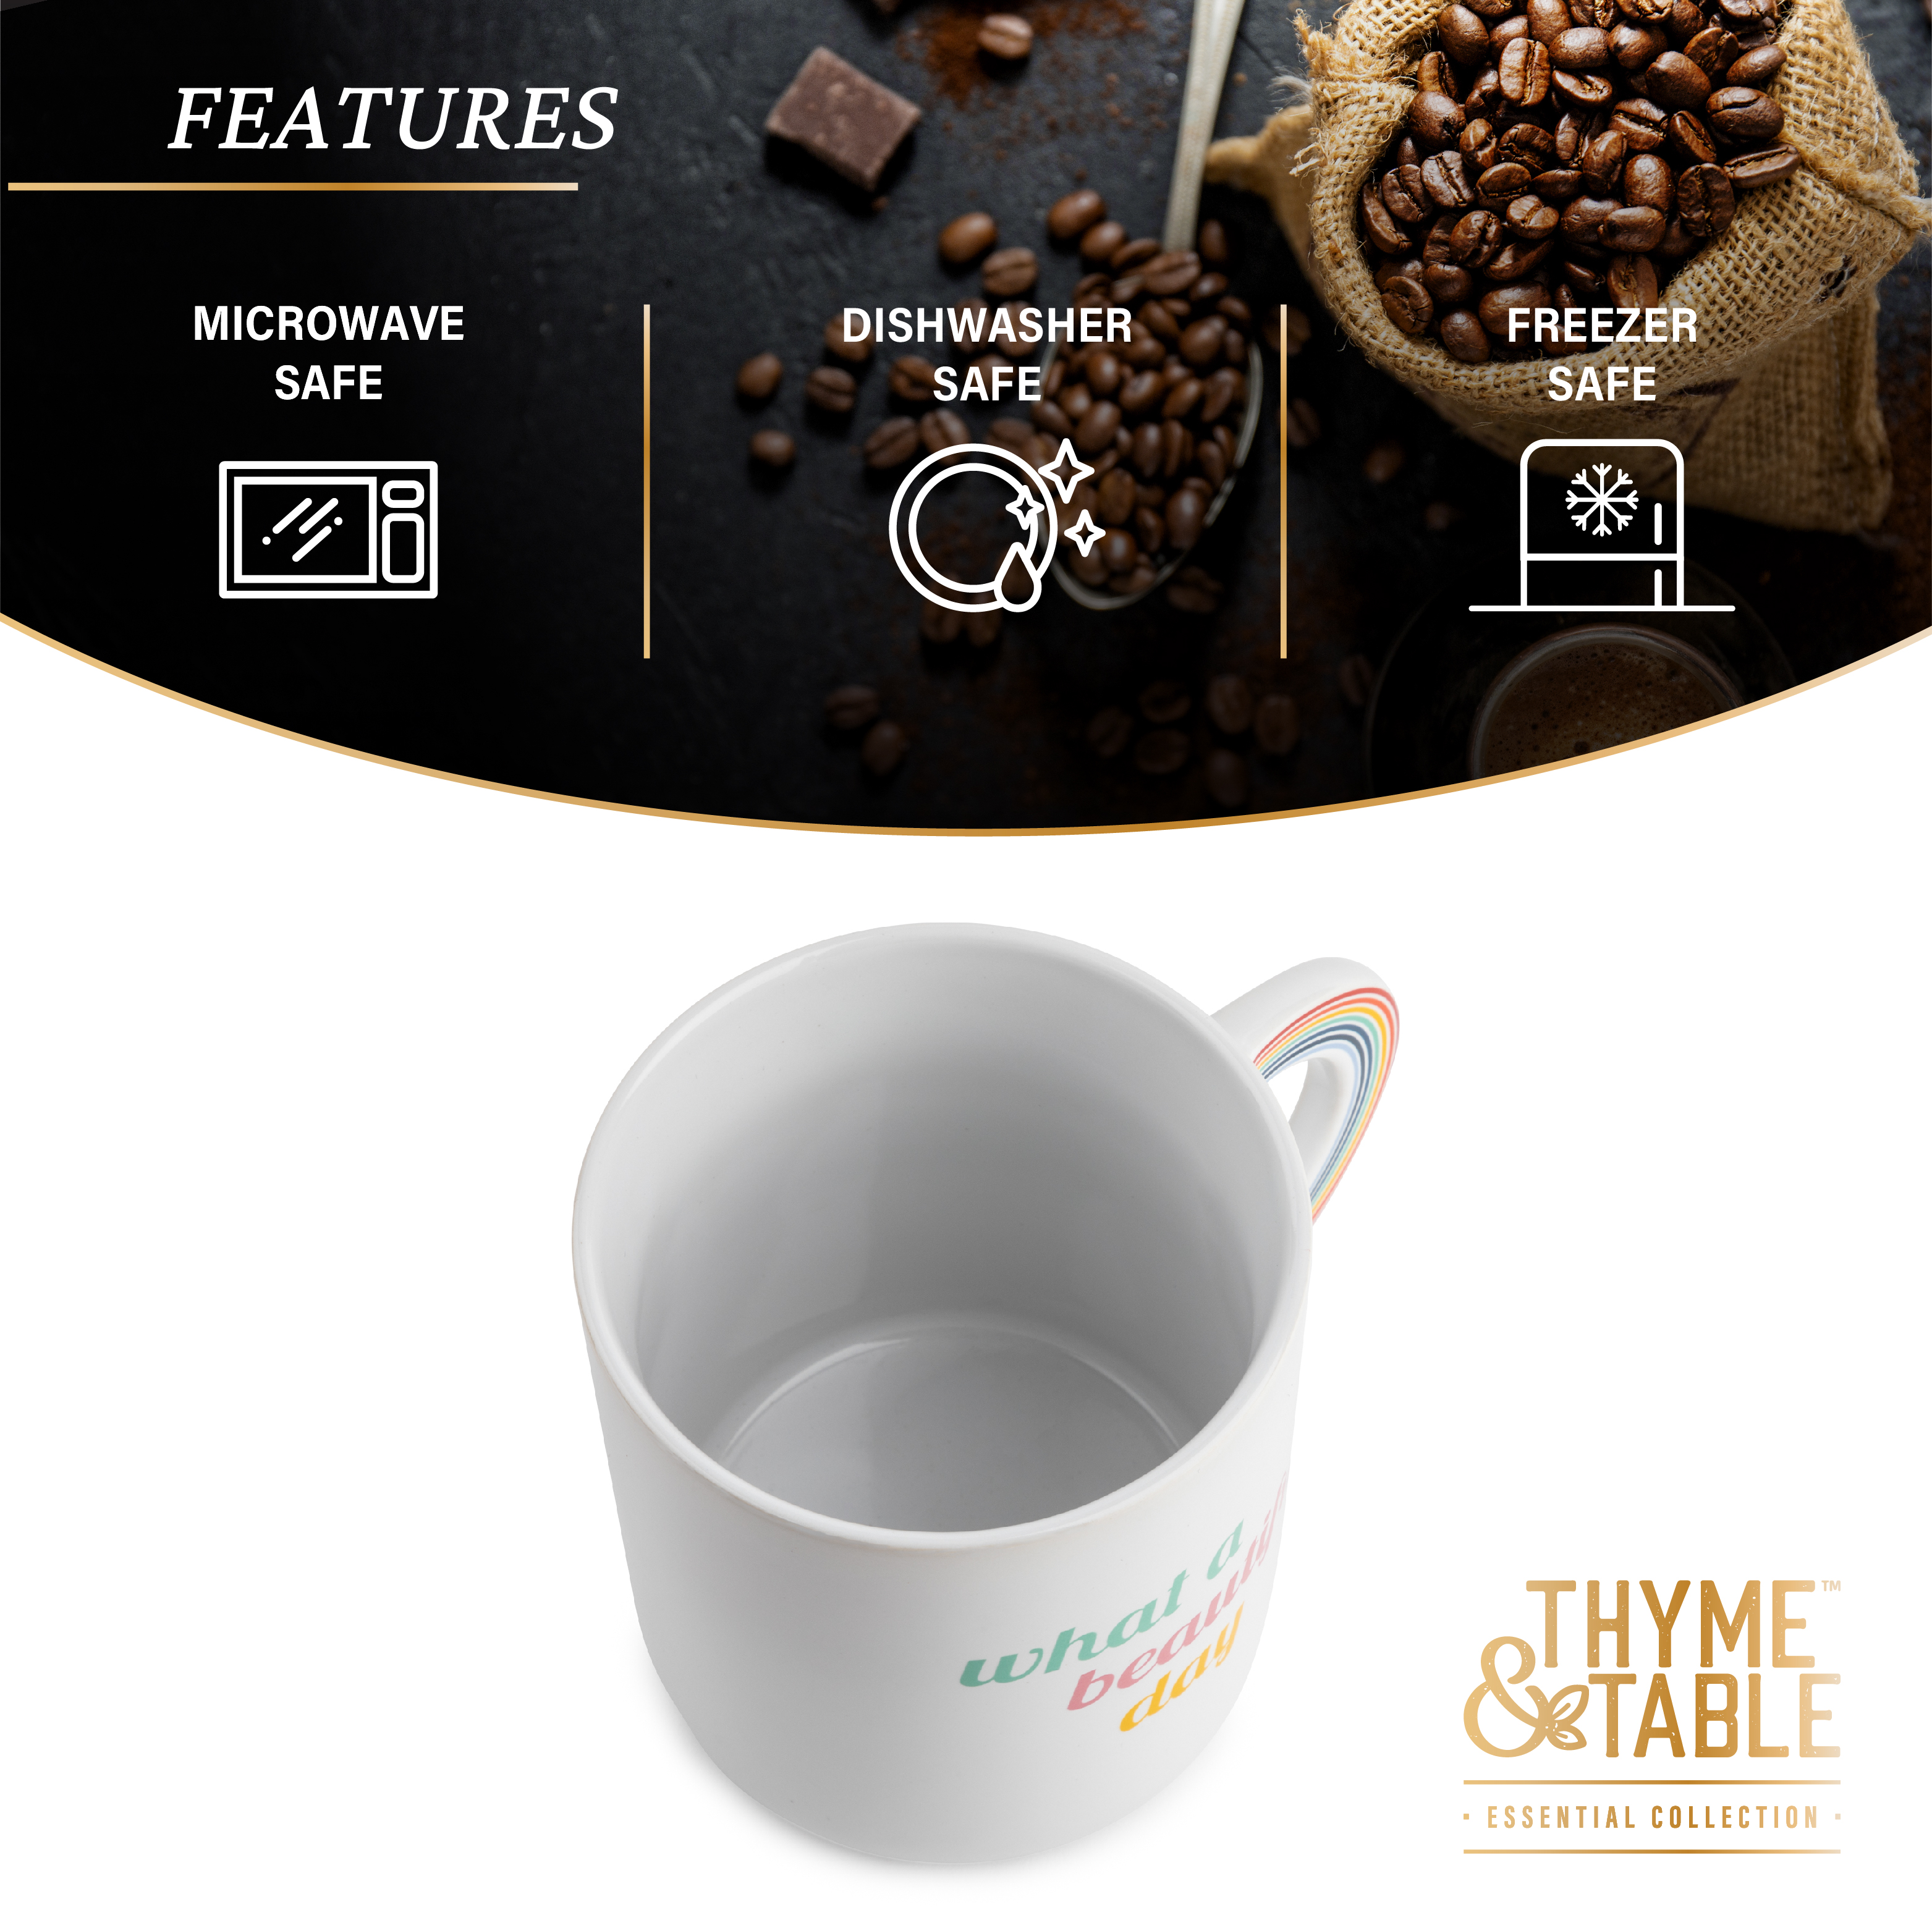 Thyme & Table Beautiful Day Ceramic Coffe Mug, 20 fl oz - image 5 of 6